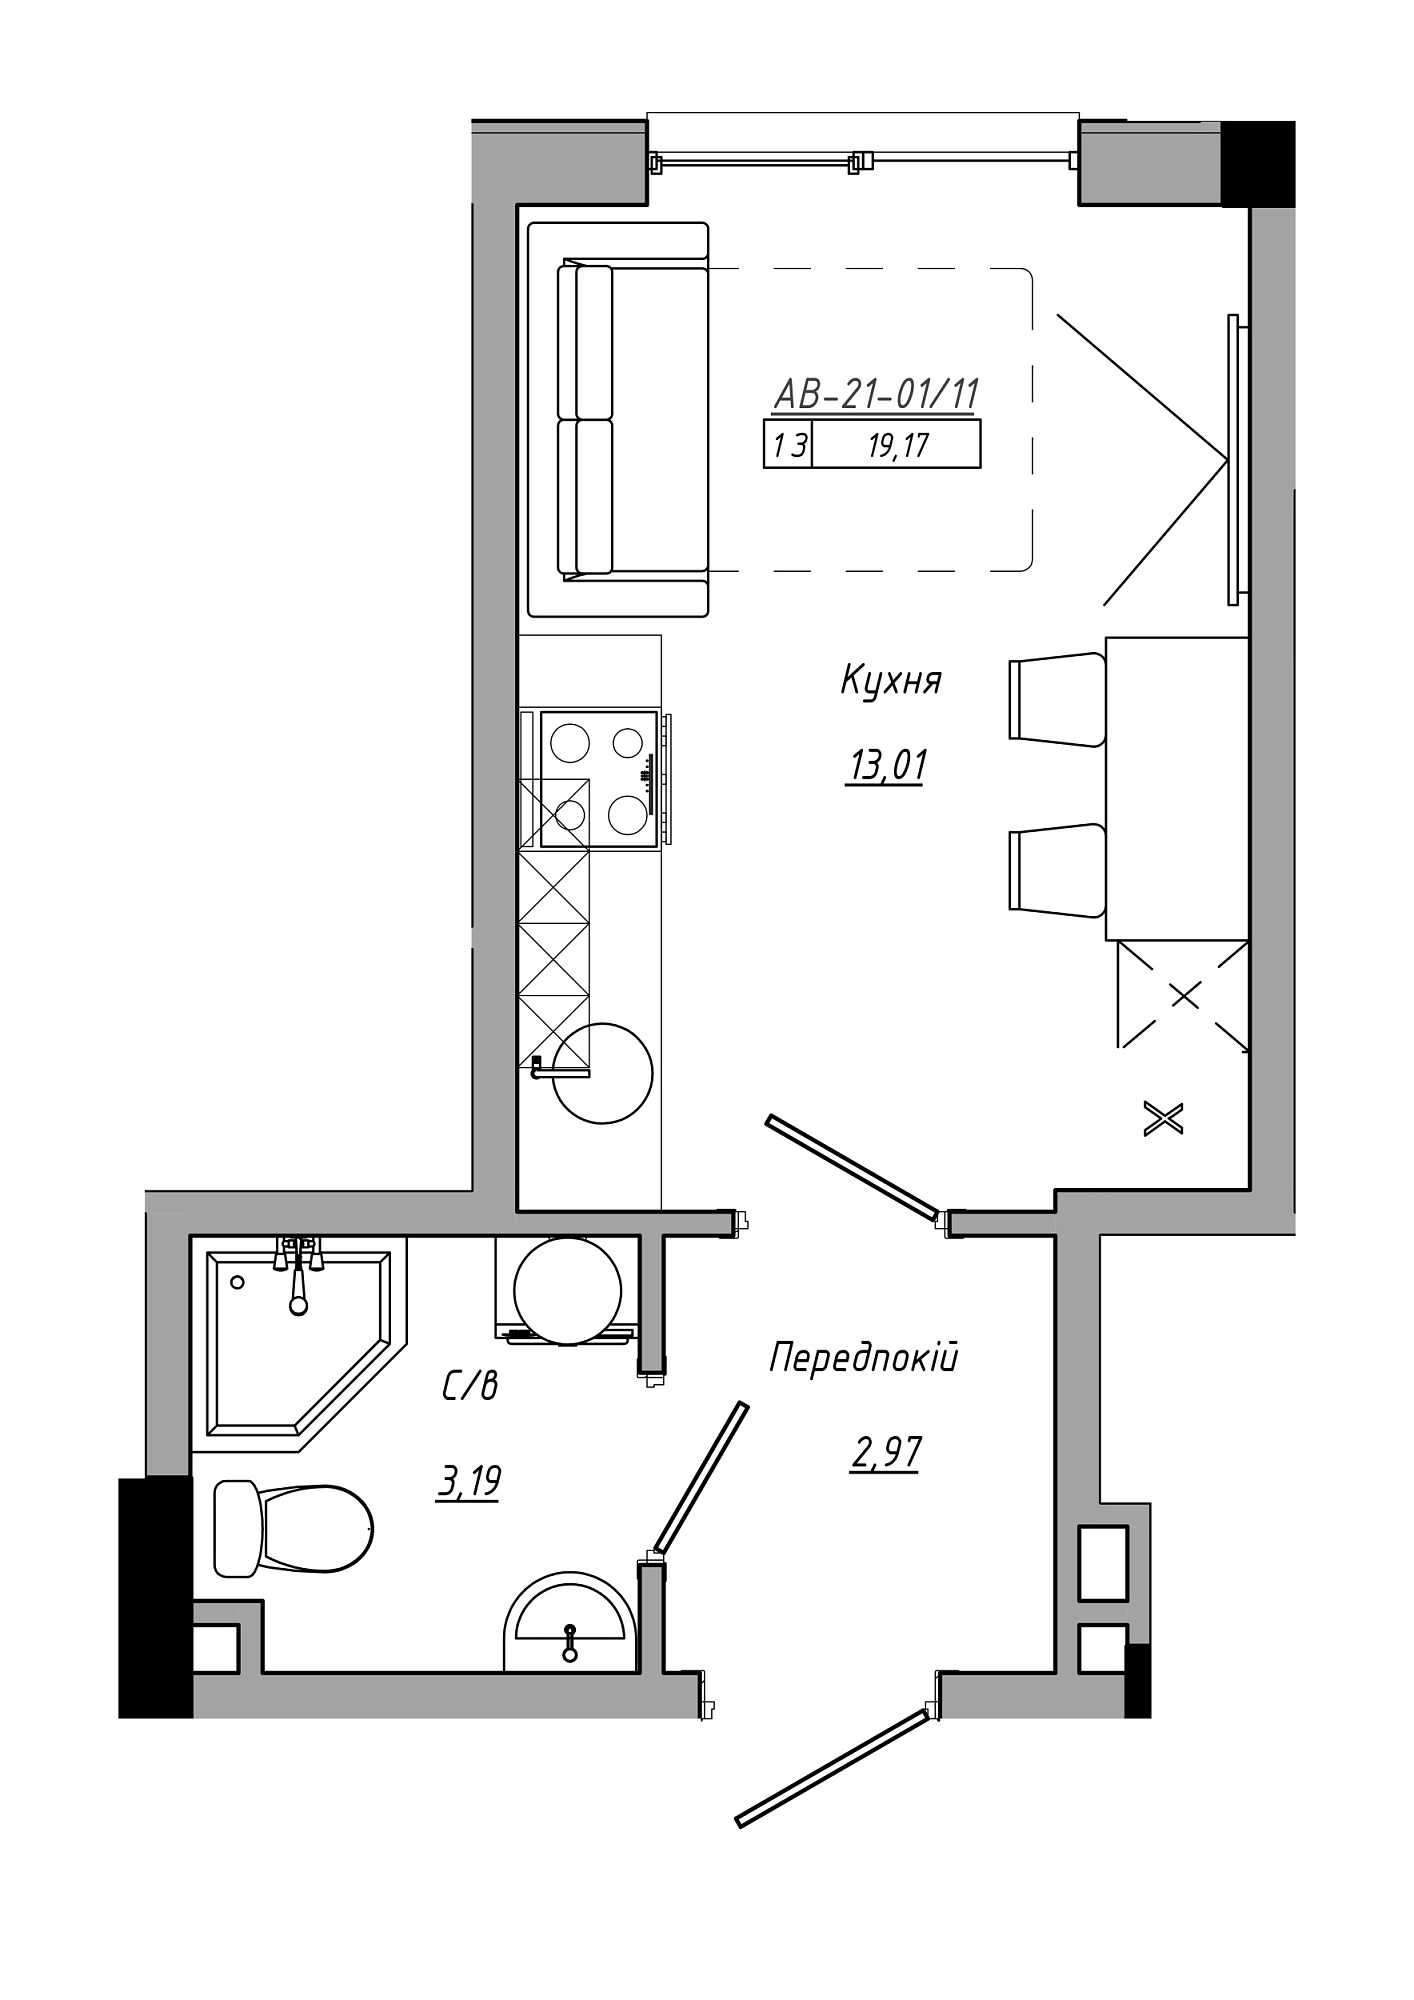 Planning Smart flats area 19.17m2, AB-21-01/00011.